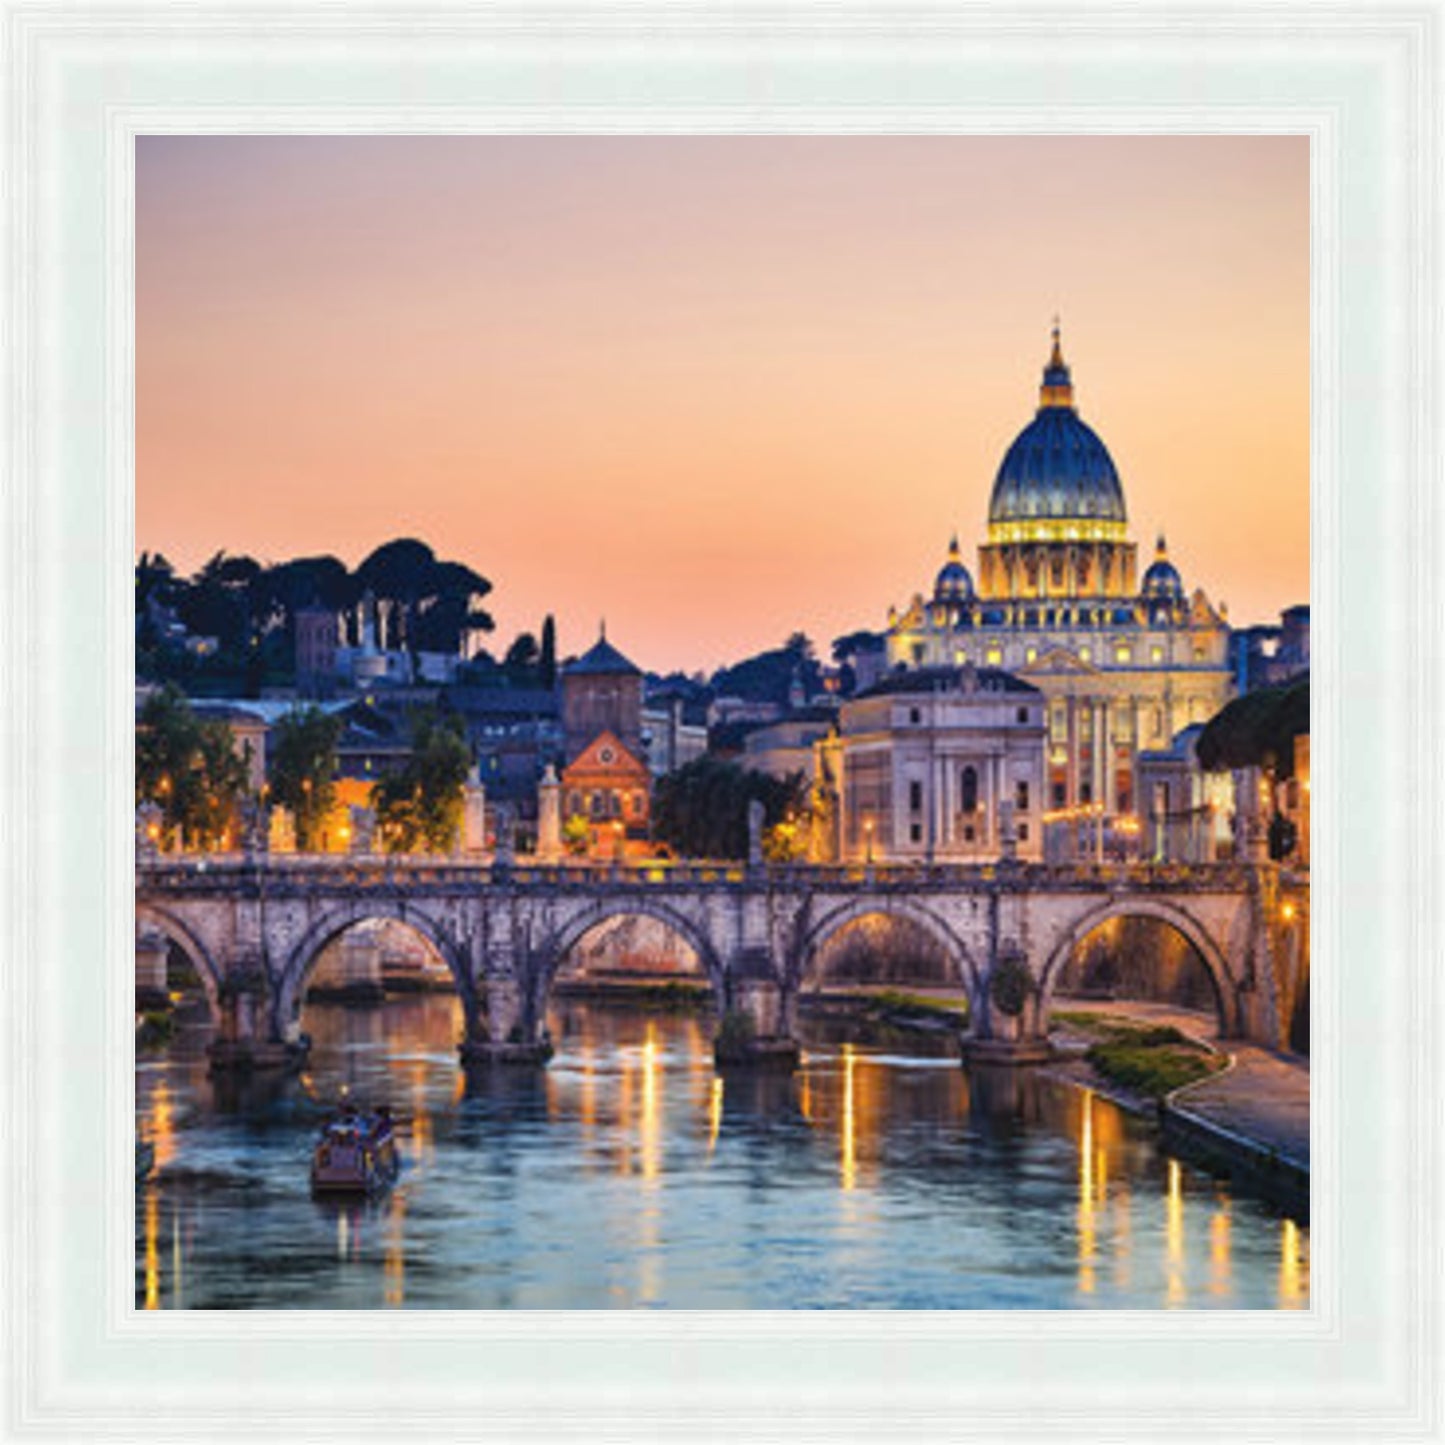 St Peter's Basilica, Rome - Slim Frame